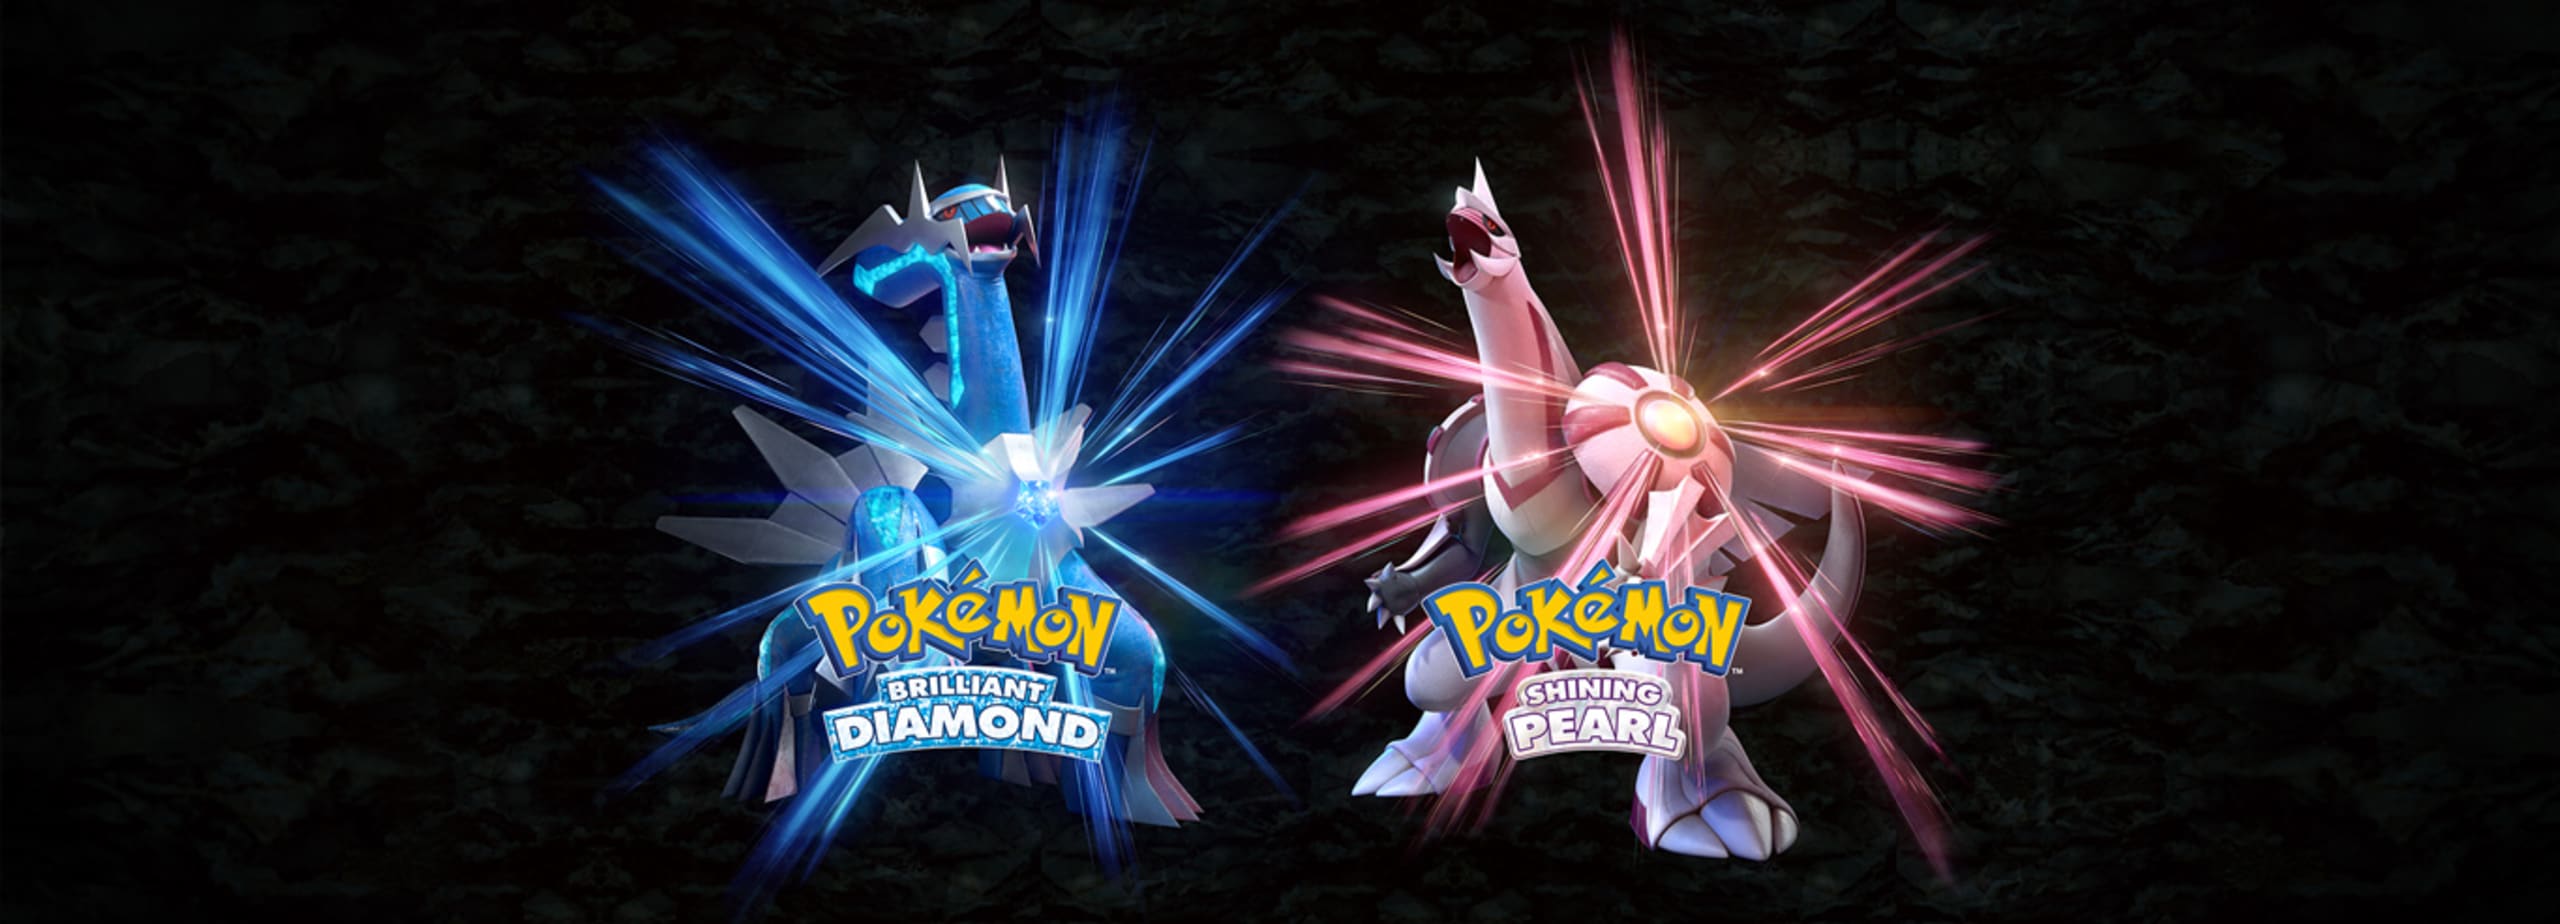 Pokemon Brilliant Diamond & Pokemon Shining Pearl - Available now